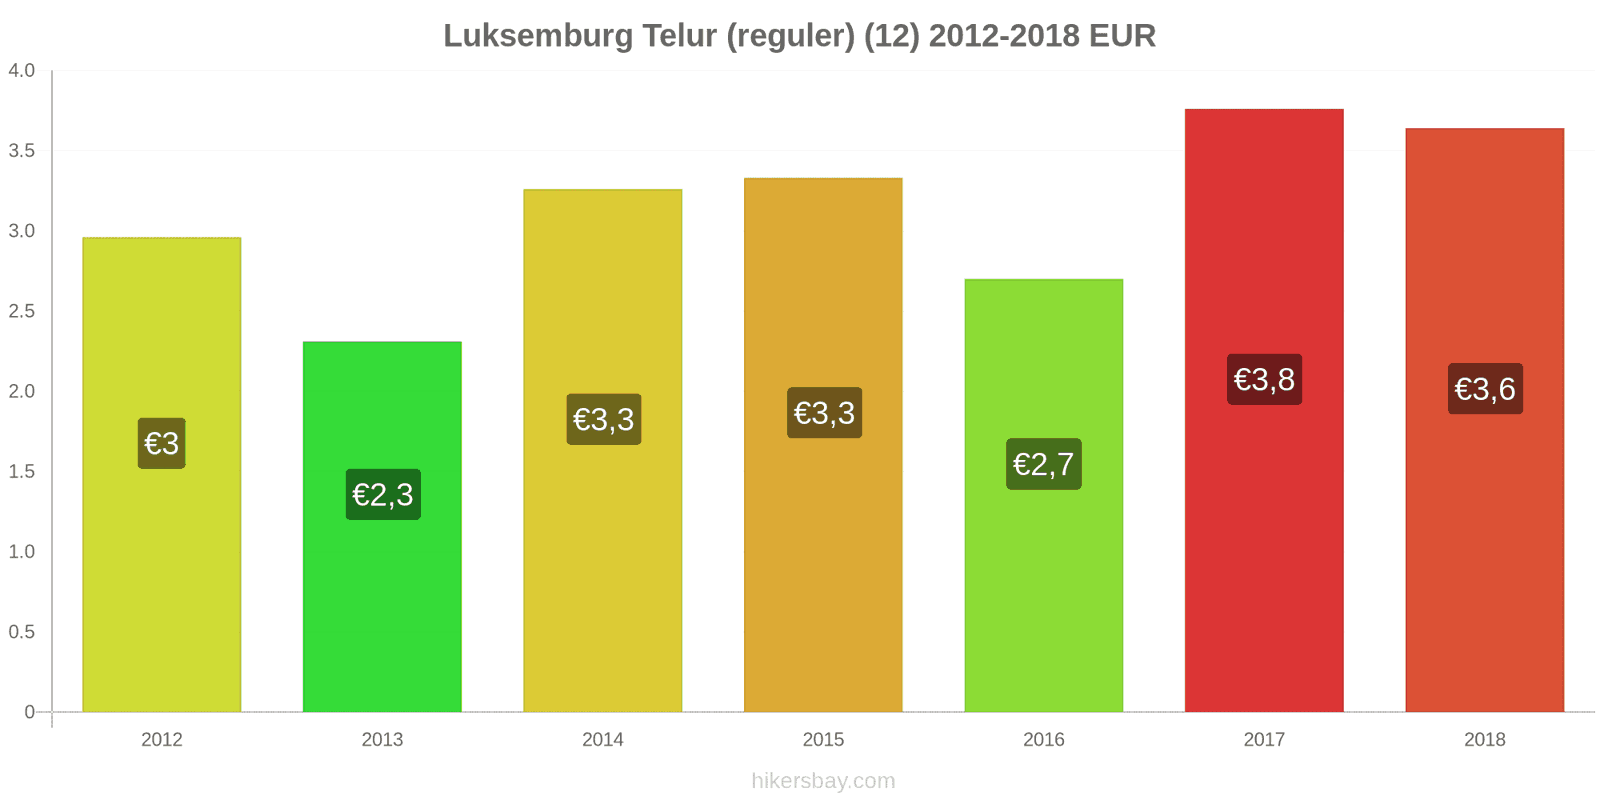 Luksemburg perubahan harga Telur (biasa) (12) hikersbay.com